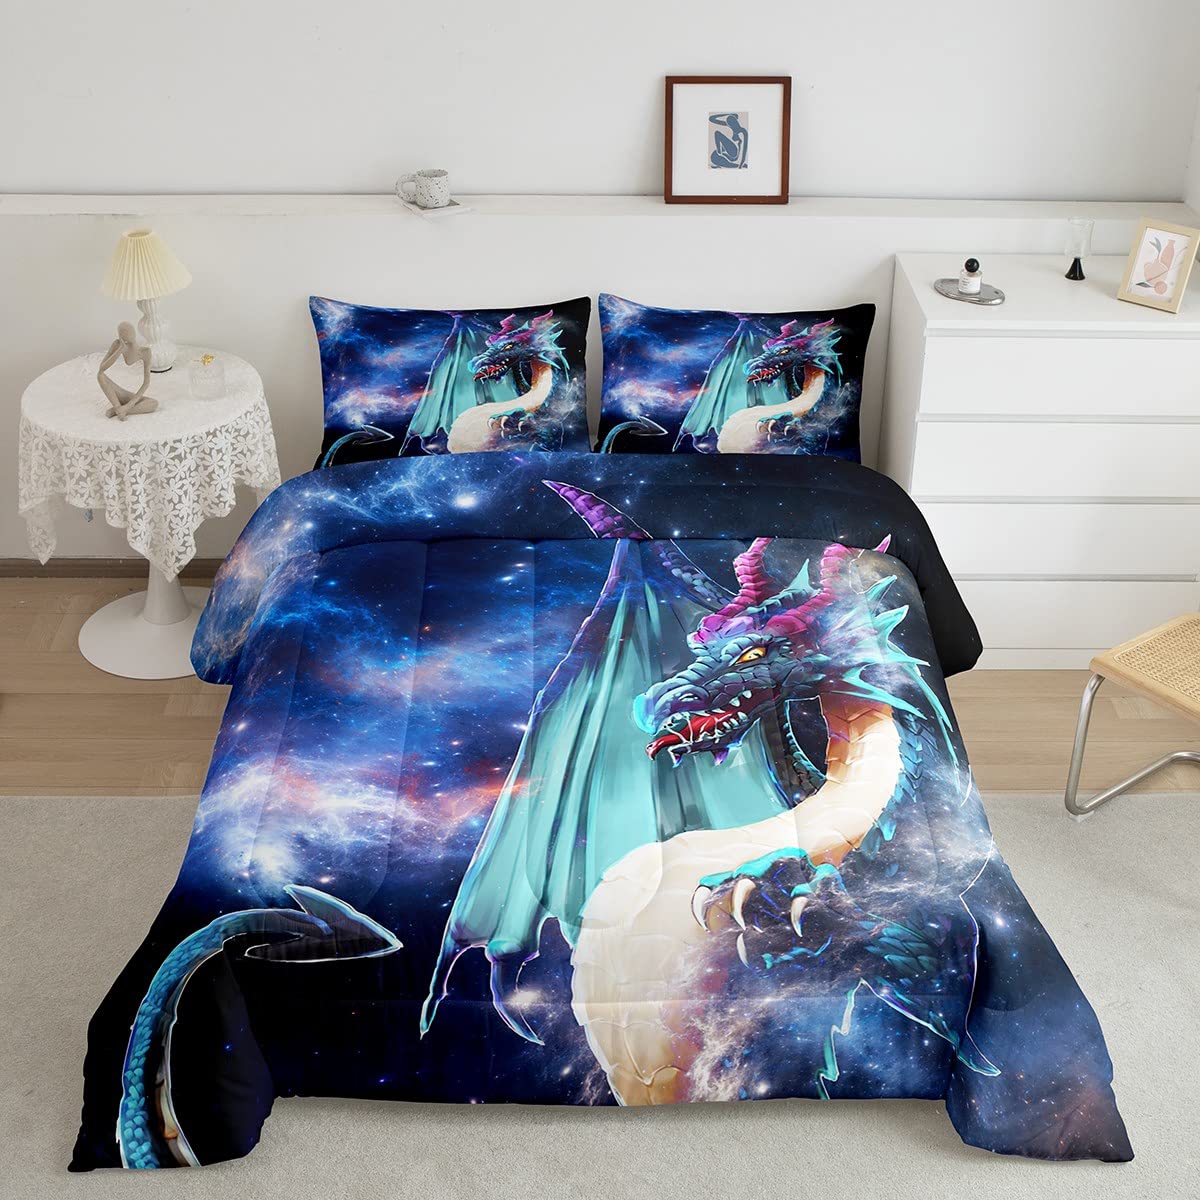 Feelyou Boys Dragon Bedding Set Galaxy Universe Print Comforter Set for Kids Boys Girls Outer Space Scary Dragon Comforter Dinosaur Animal Decor Qu...